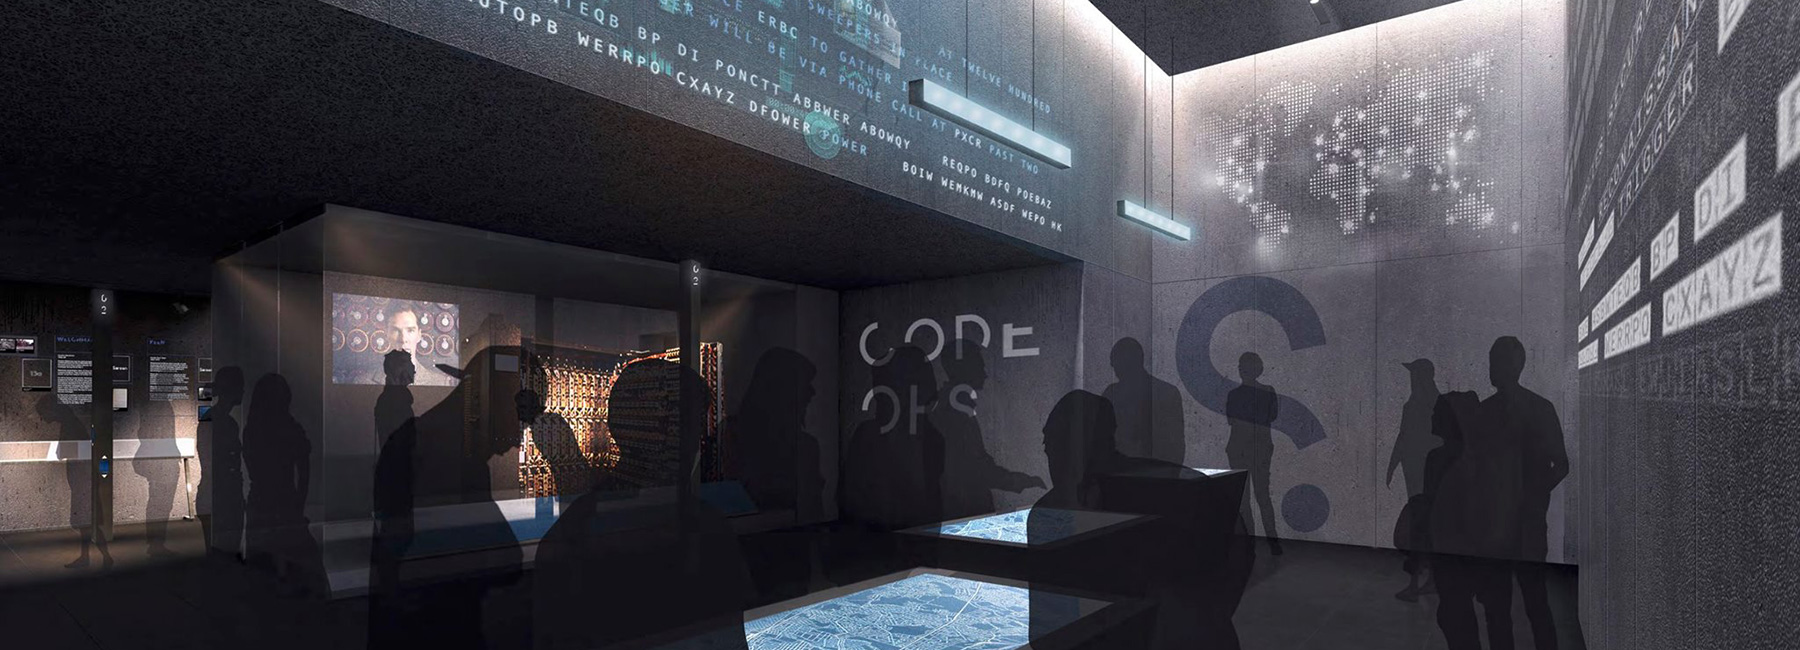 SPYSCAPE: interactive spy museum by david adjaye set to open in new york